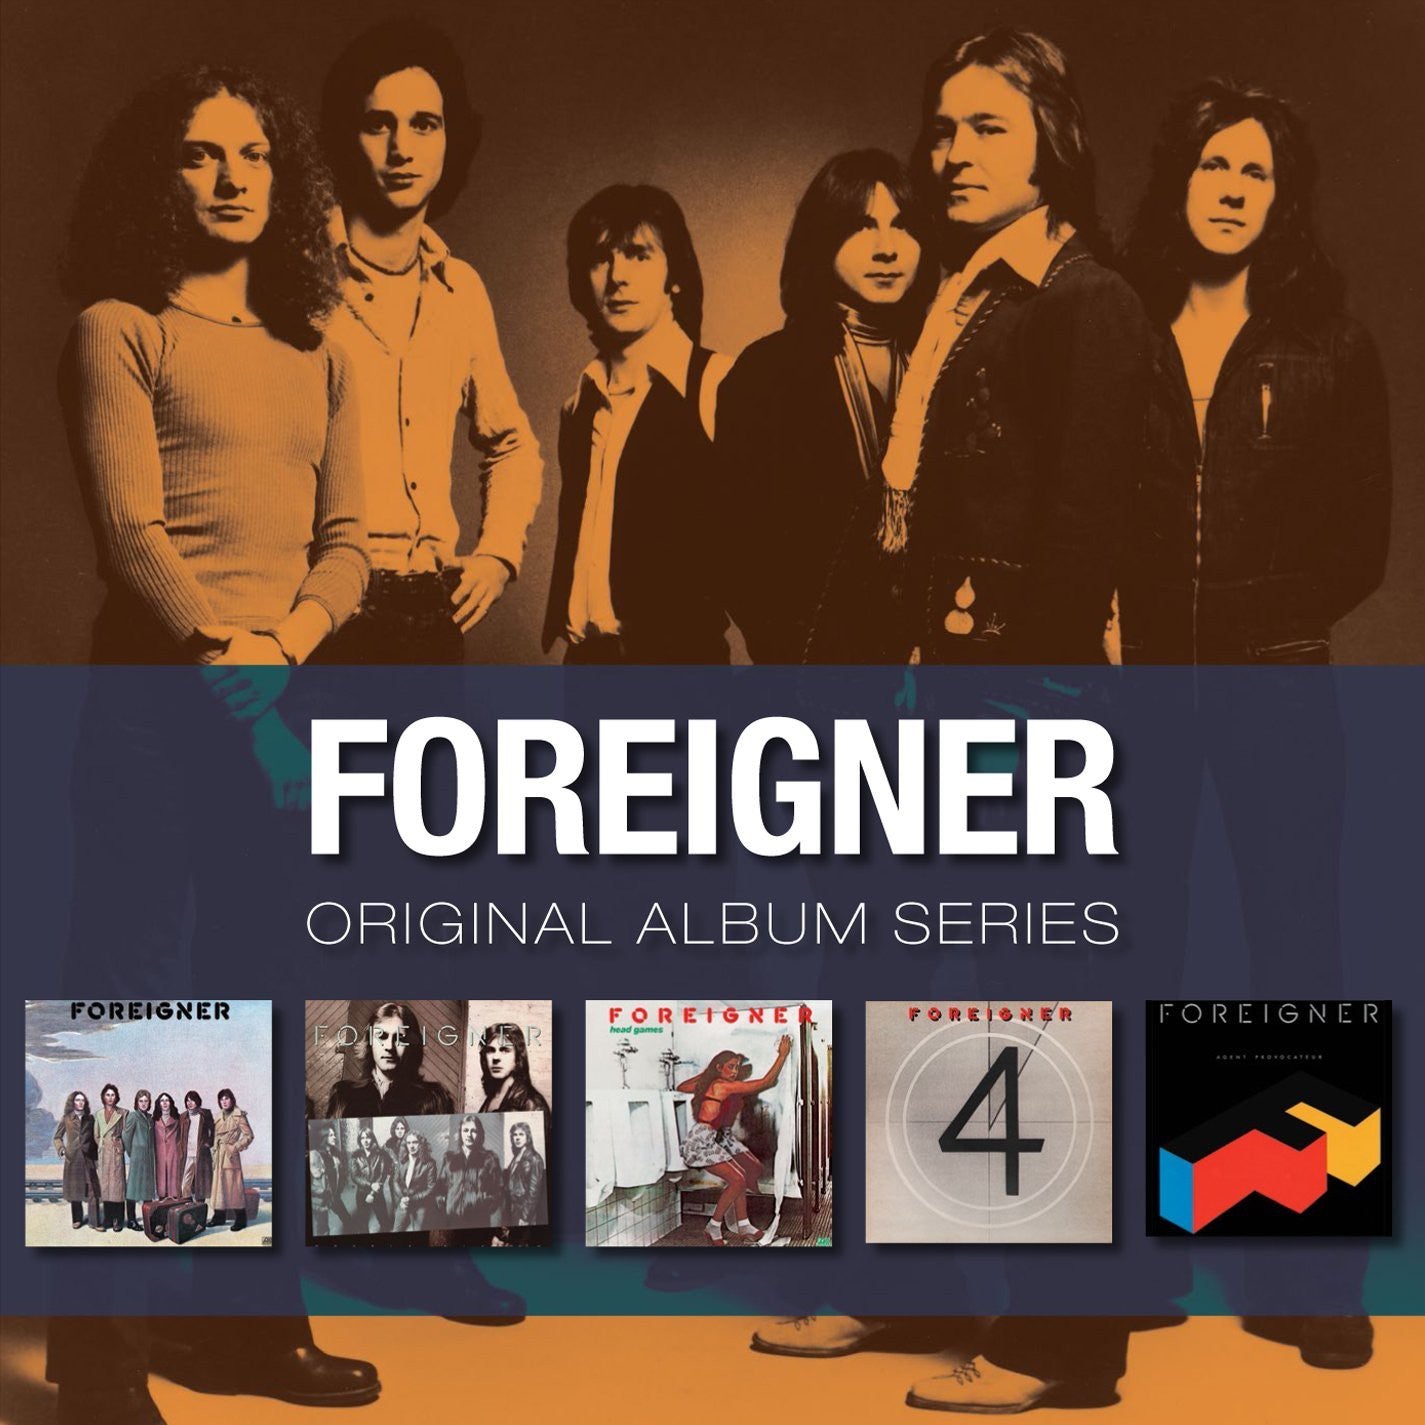 Foreigner - Original Album Series (Foreigner/Double Vision/Head Games/4/Agent Provocateur) (5CD) - CD - New